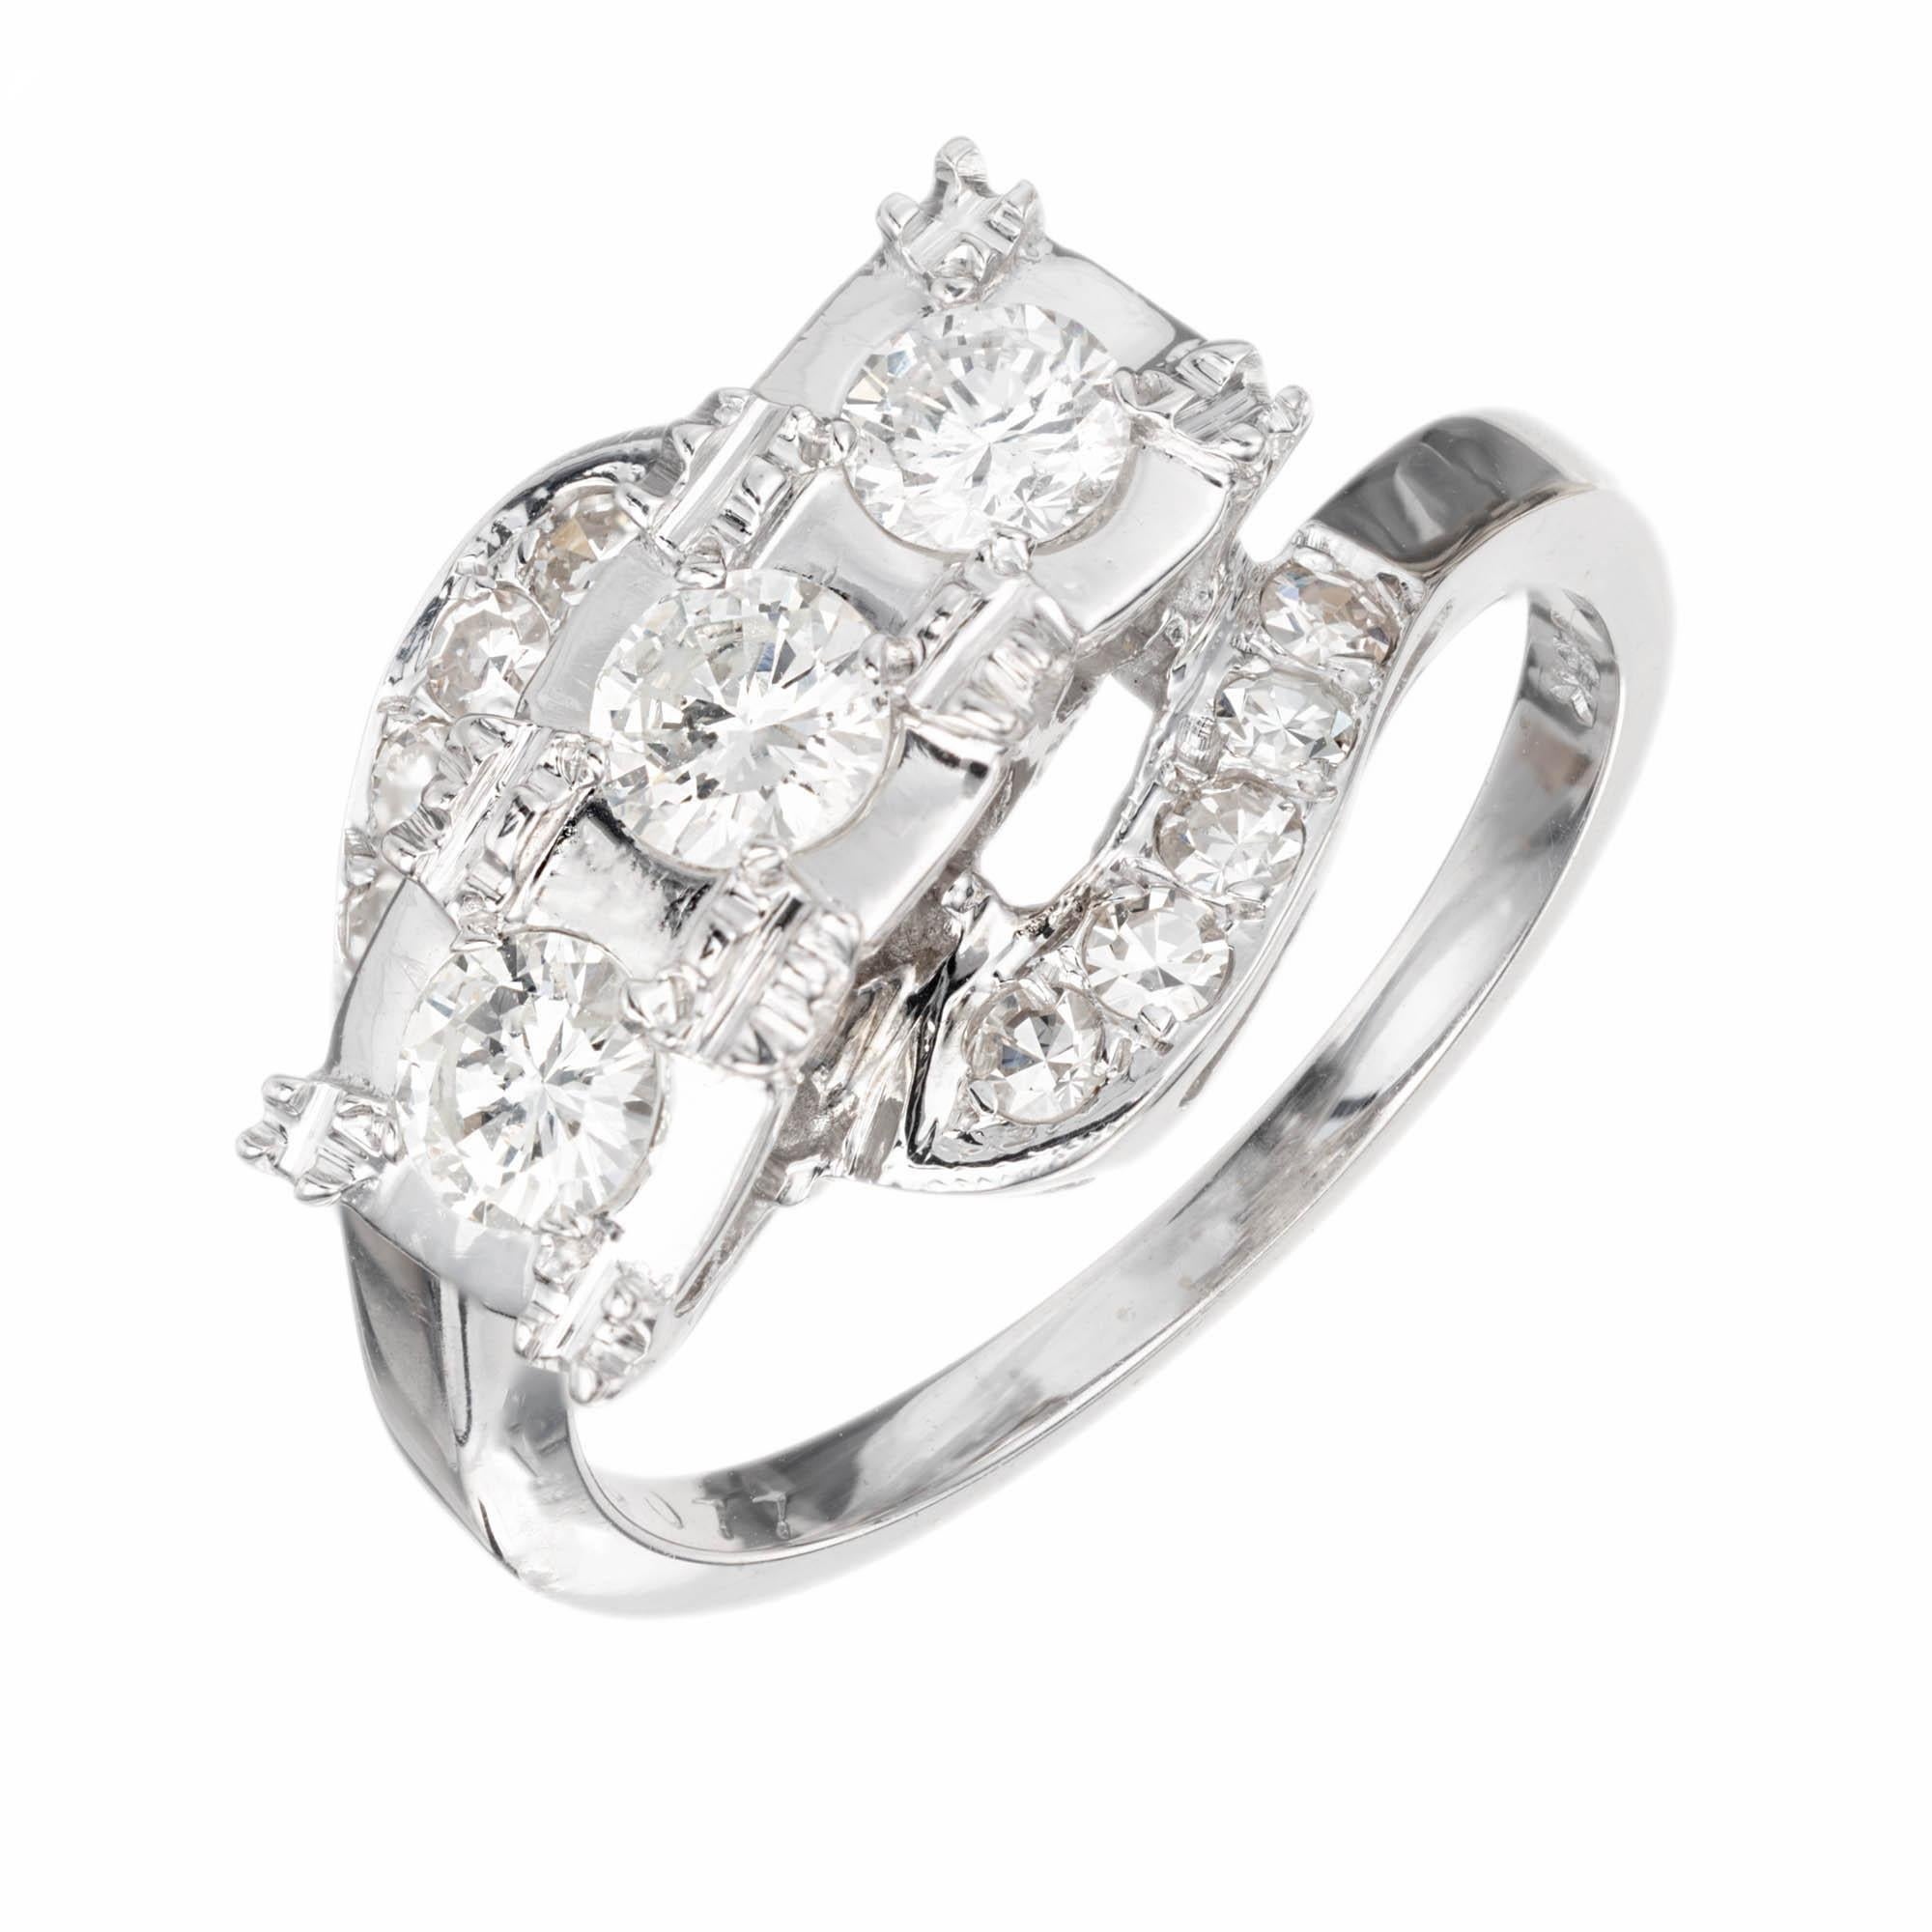 Vintage 1950s three stone diamond ring. Swirl bypass style in 14k white gold. Three center diamonds, accented with single cut dimamonds.

3 round brilliant cut J SI diamonds, Approx. .50 carats
10 single cut S-K VS-SI diamonds, Approx.